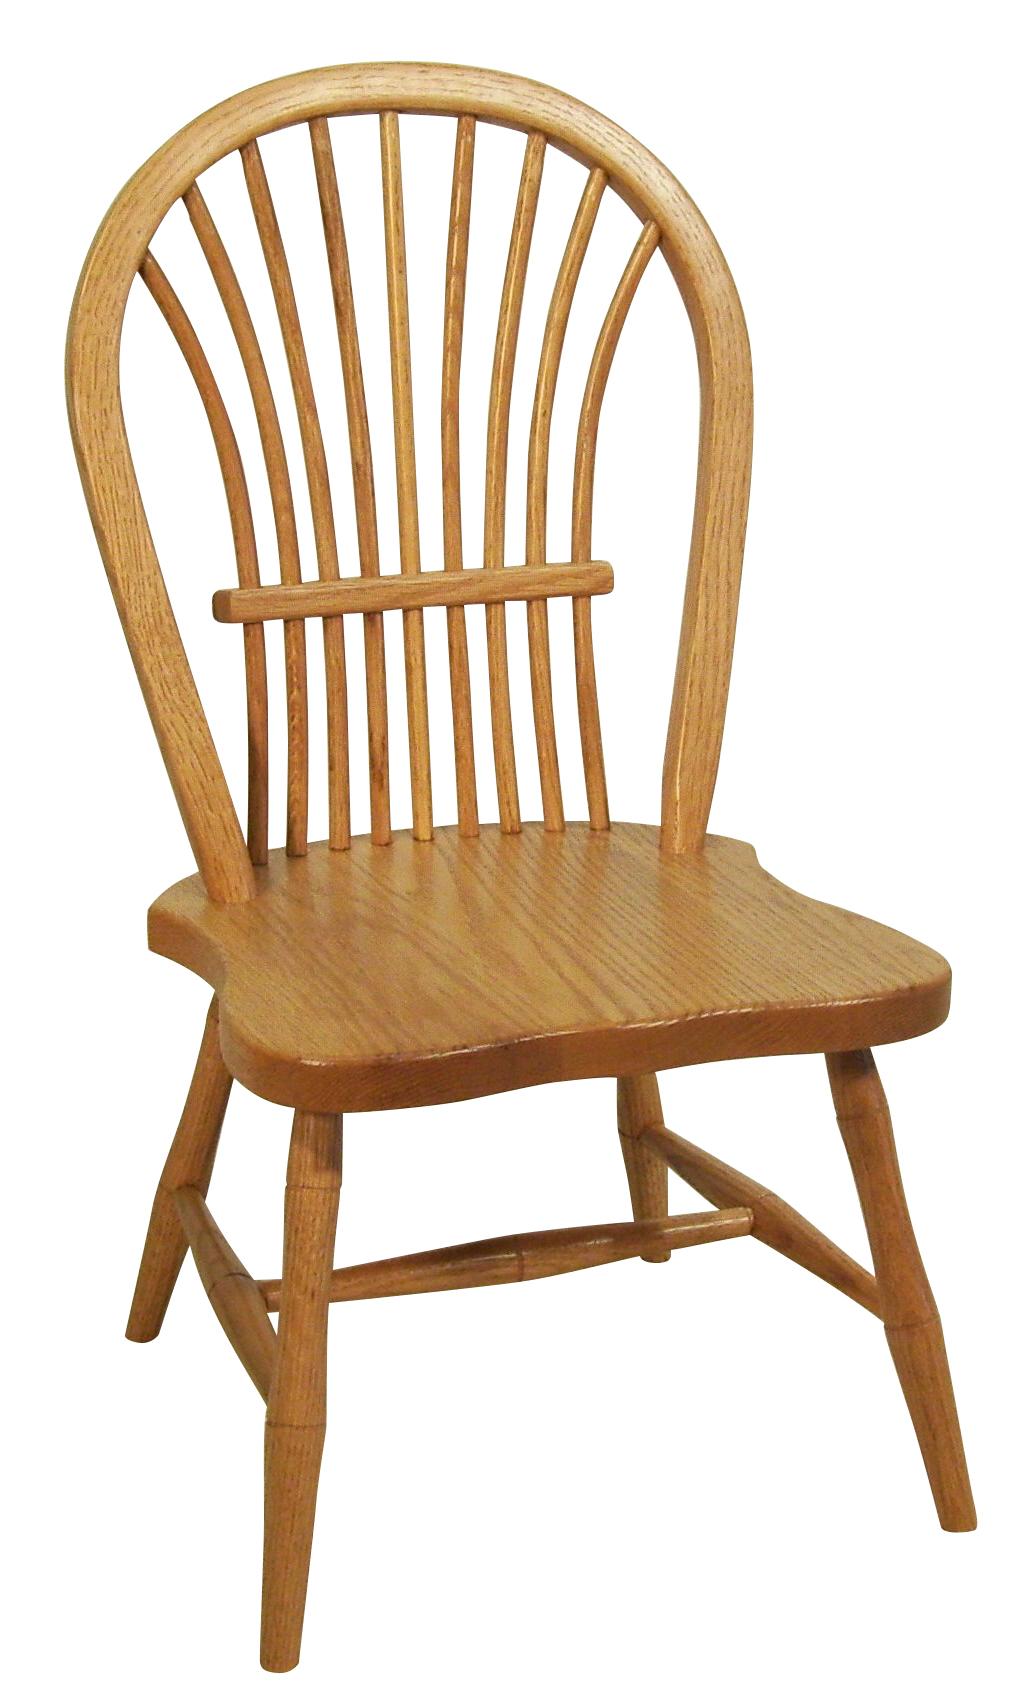 Sheaf Child's Chair